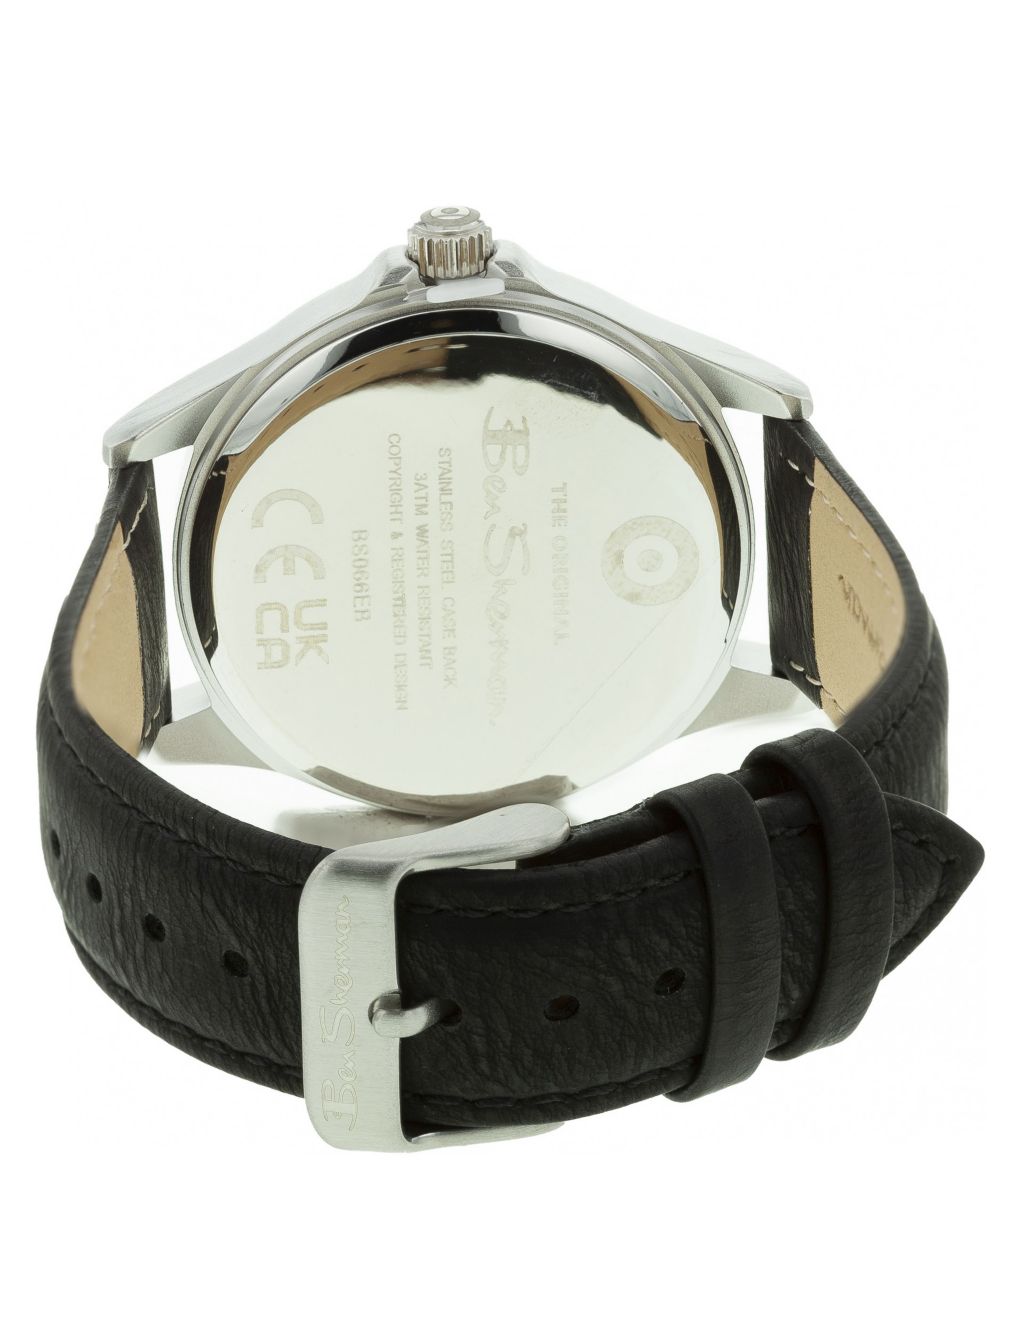 Ben Sherman Black Leather Quartz Watch image 3